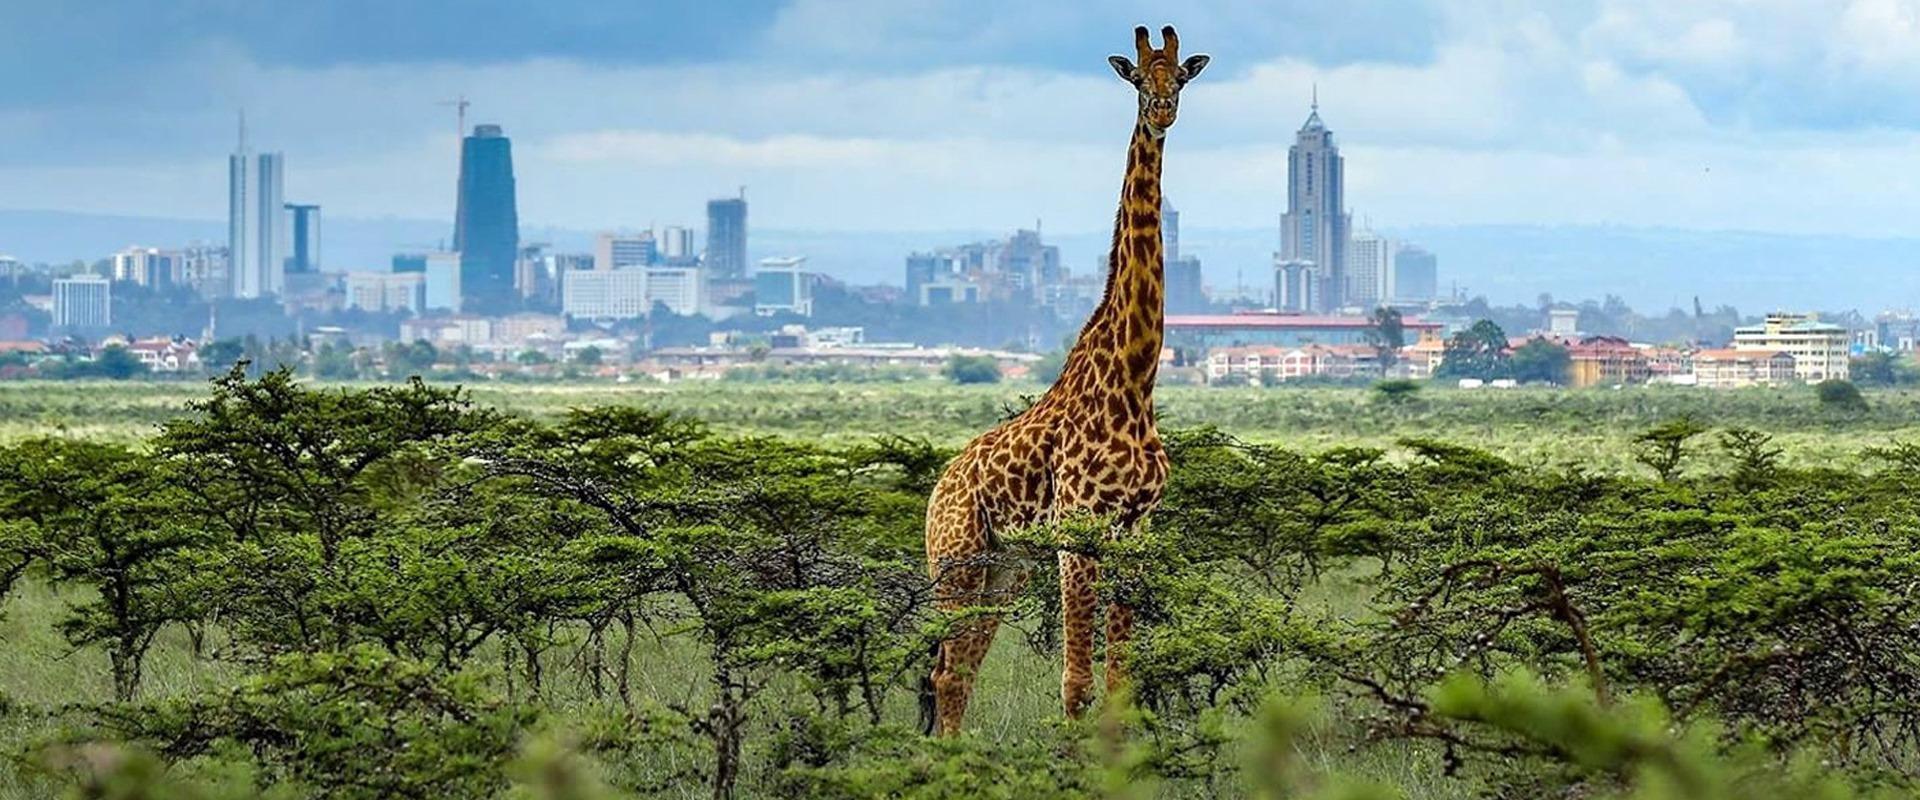 Nairobi's national park faces climate and human threats